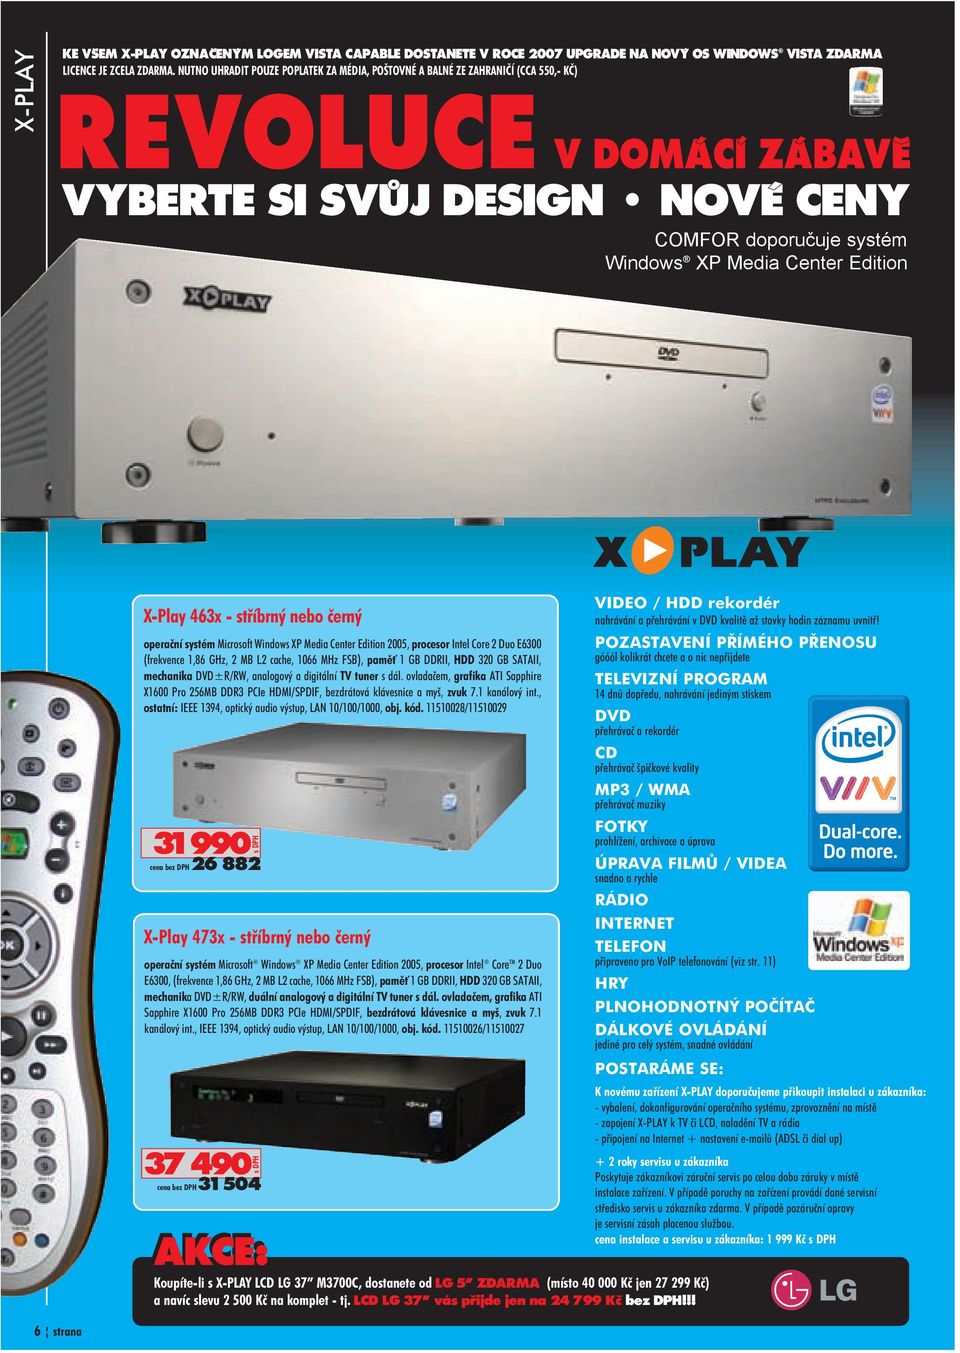 Play 463x støíbrný nebo èerný operaèní systém Microsoft Windows XP Media Center Edition 2005, procesor Intel Core 2 Duo E6300 (frekvence 1,86 GHz, 2 MB L2 cache, 1066 MHz FSB), pamì 1 GB DDRII, HDD